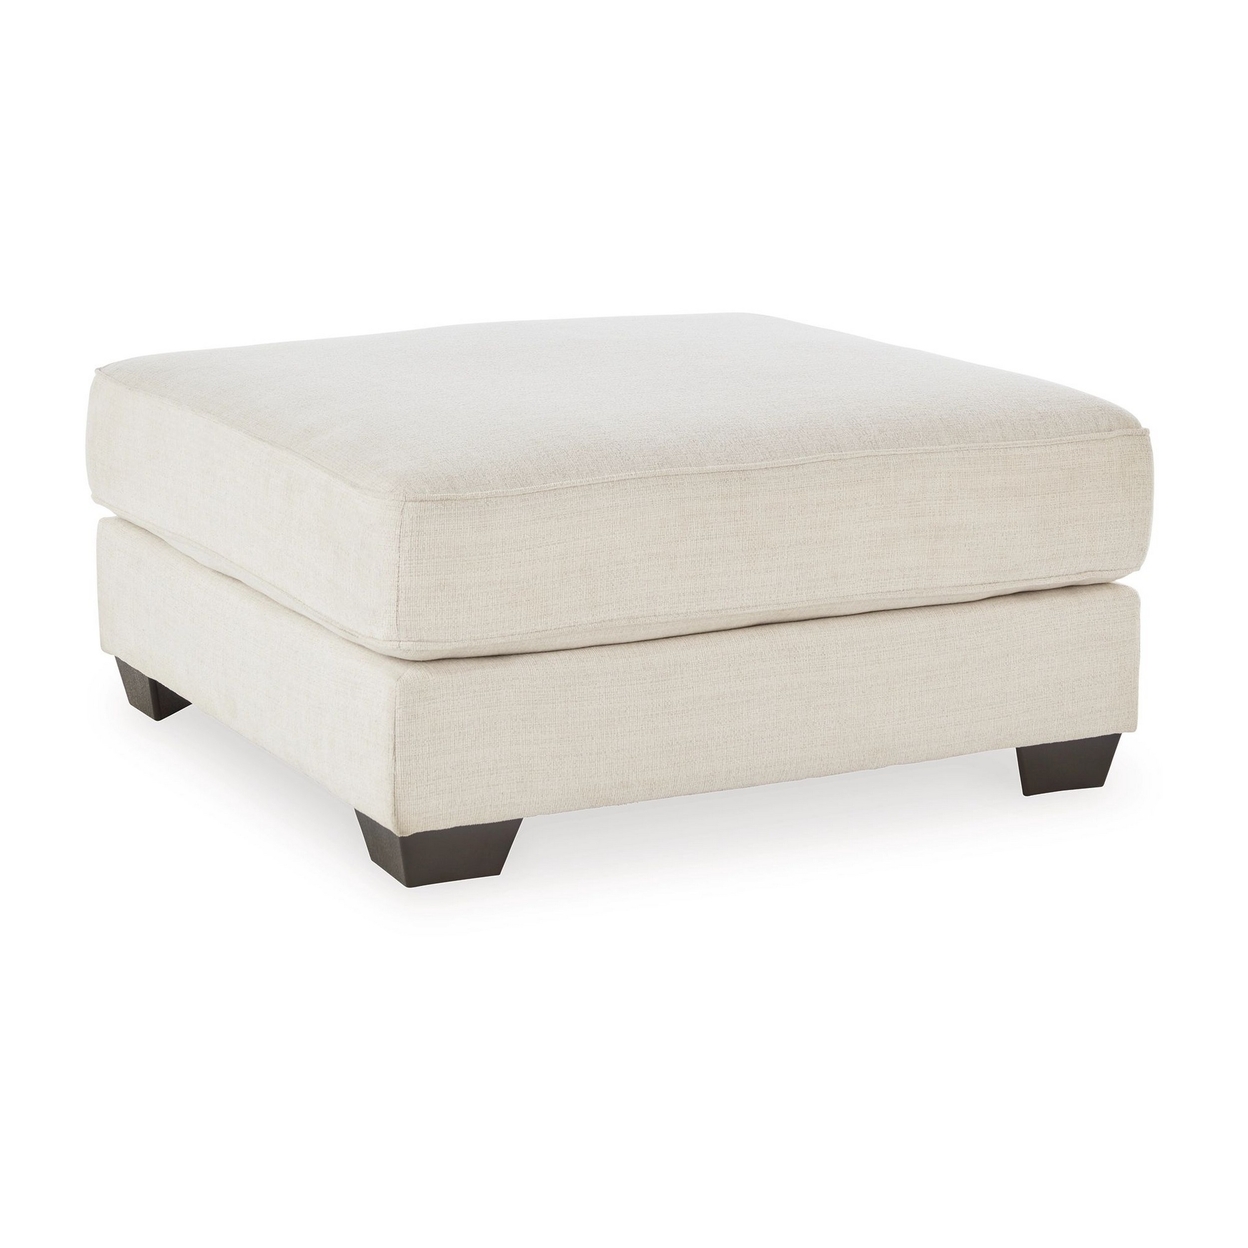 42 Inch Ottoman, Oversized Cushion, Modern Style, Soft Beige Polyester - Saltoro Sherpi